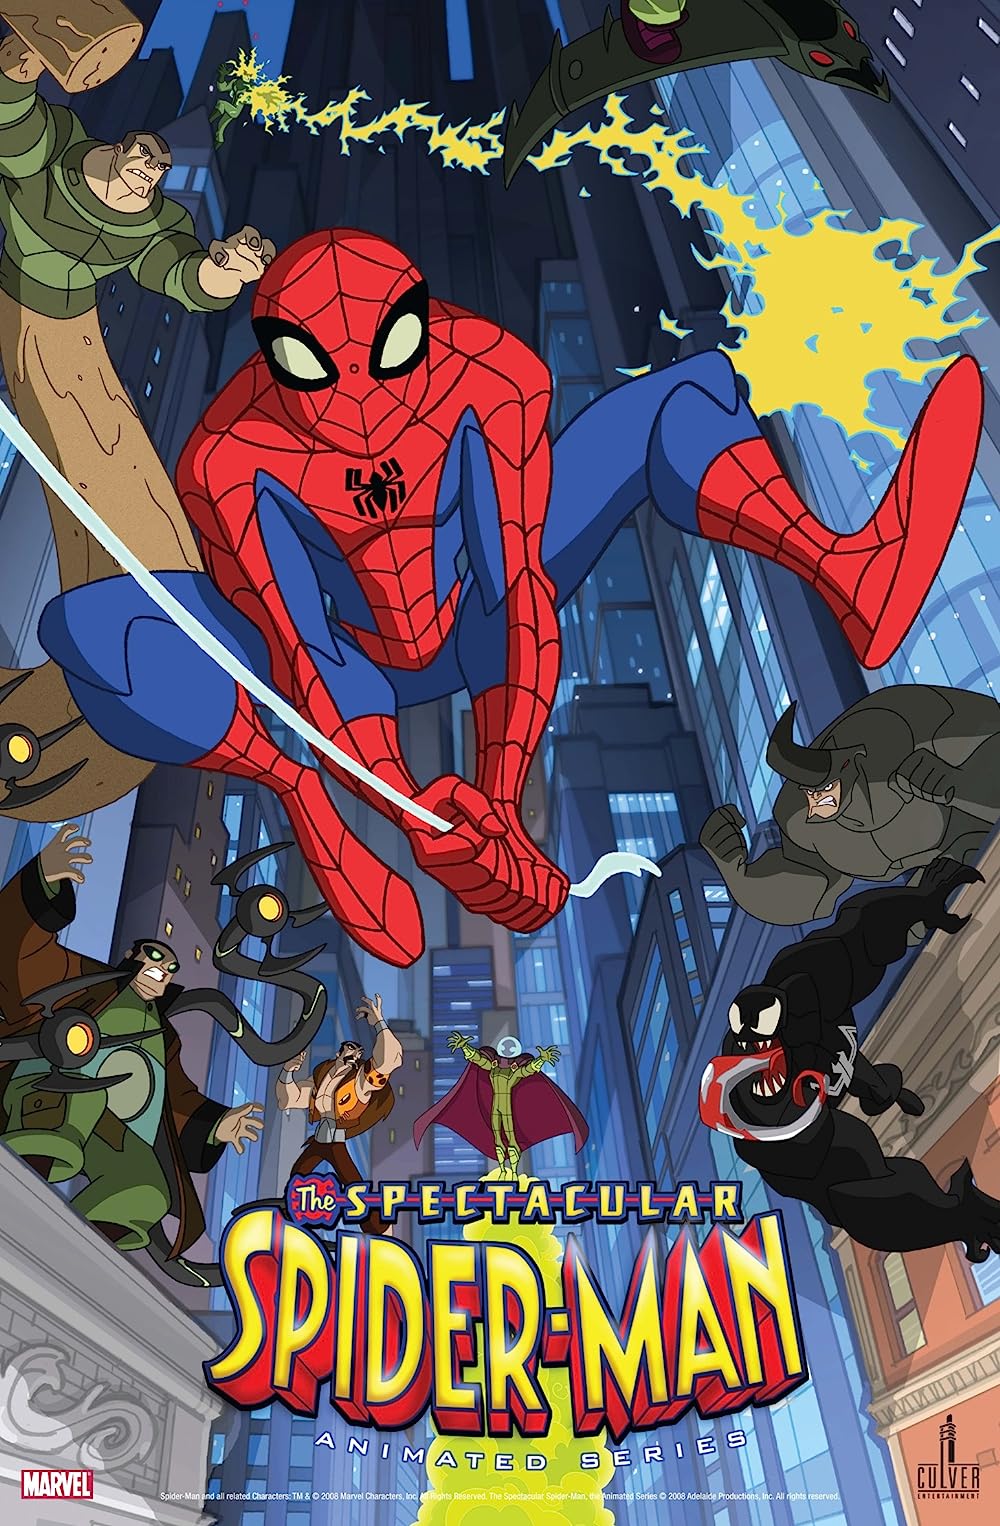 《神奇蜘蛛侠 The Spectacular Spider-Man》第2季